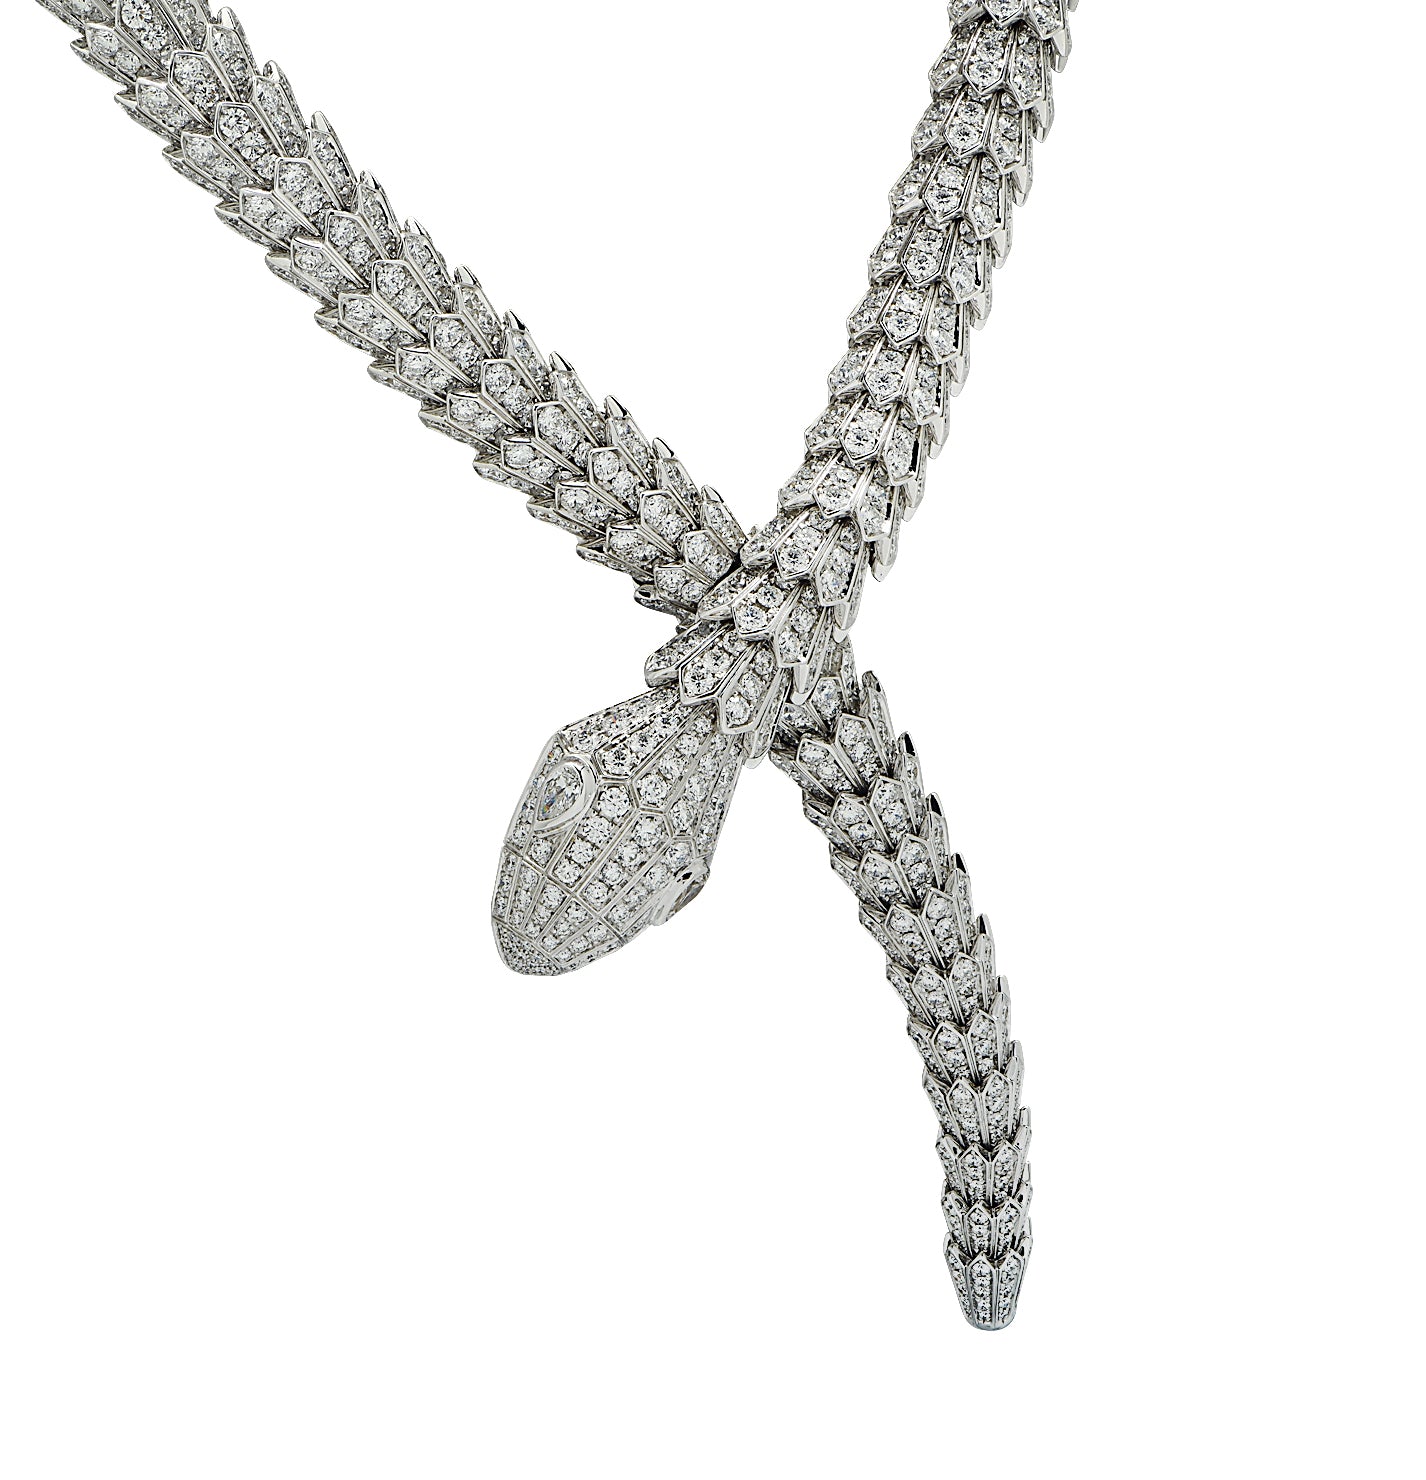 Zendaya Looks Showstopping in a Massive Bulgari Diamond Necklace